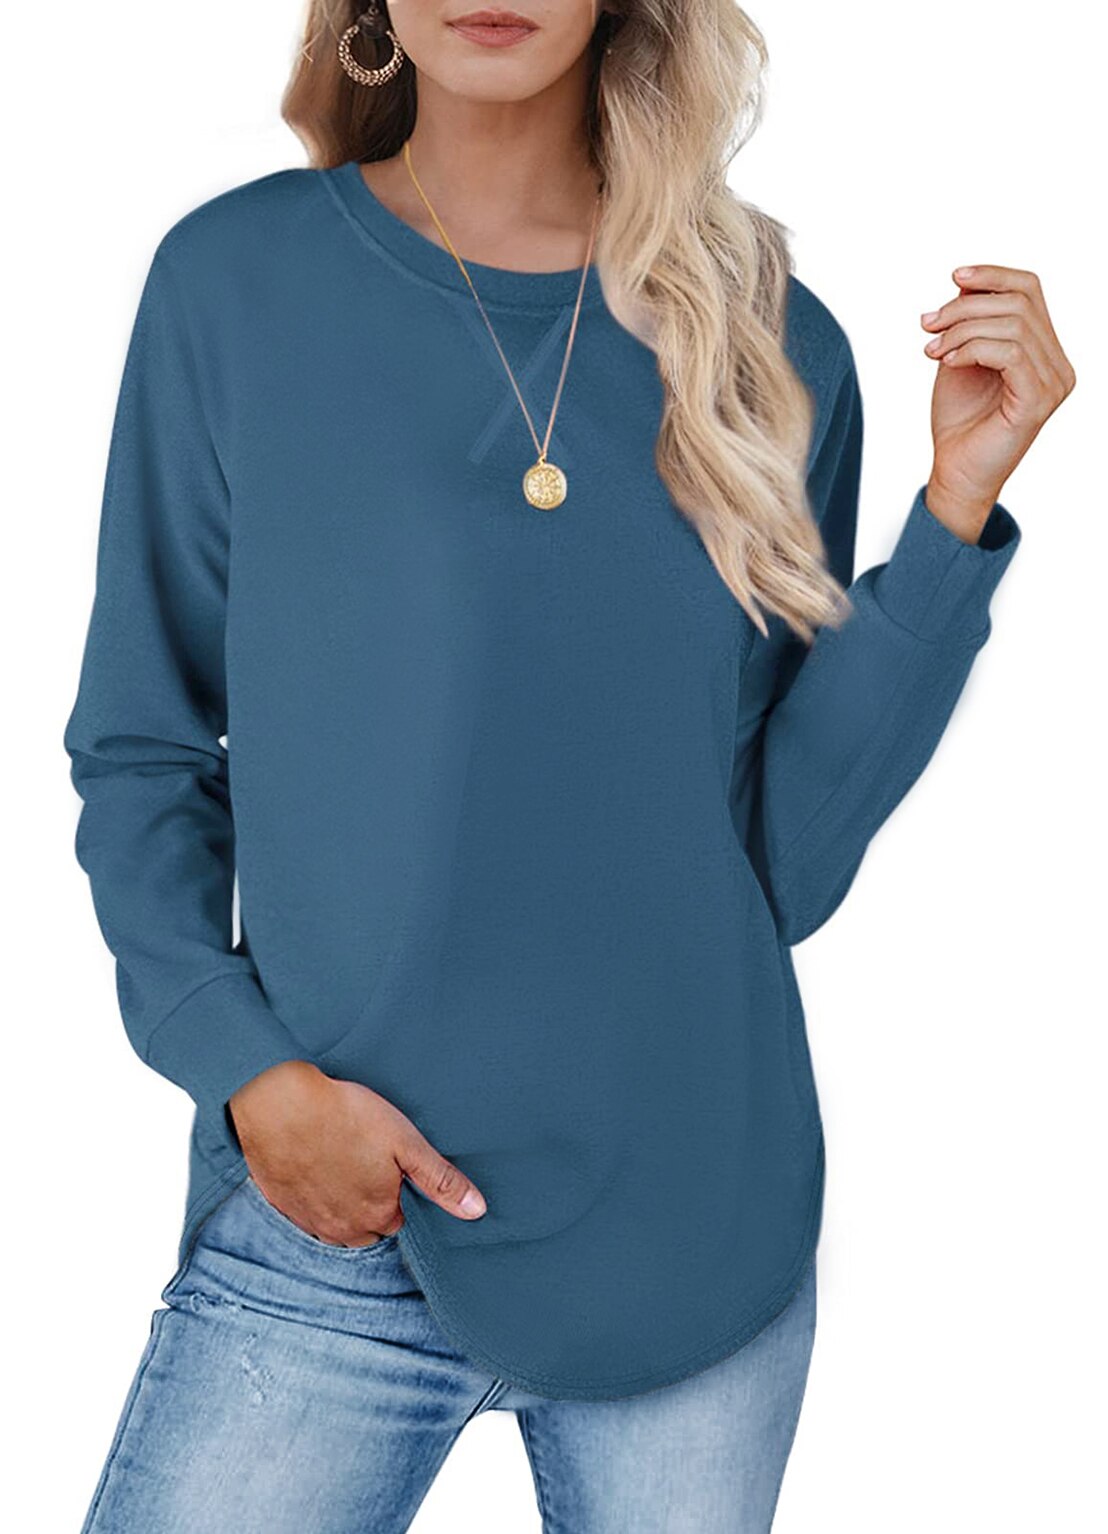 Fantaslook Plus Size Sweatshirts for Women Crewneck Casual Tunic Tops ...